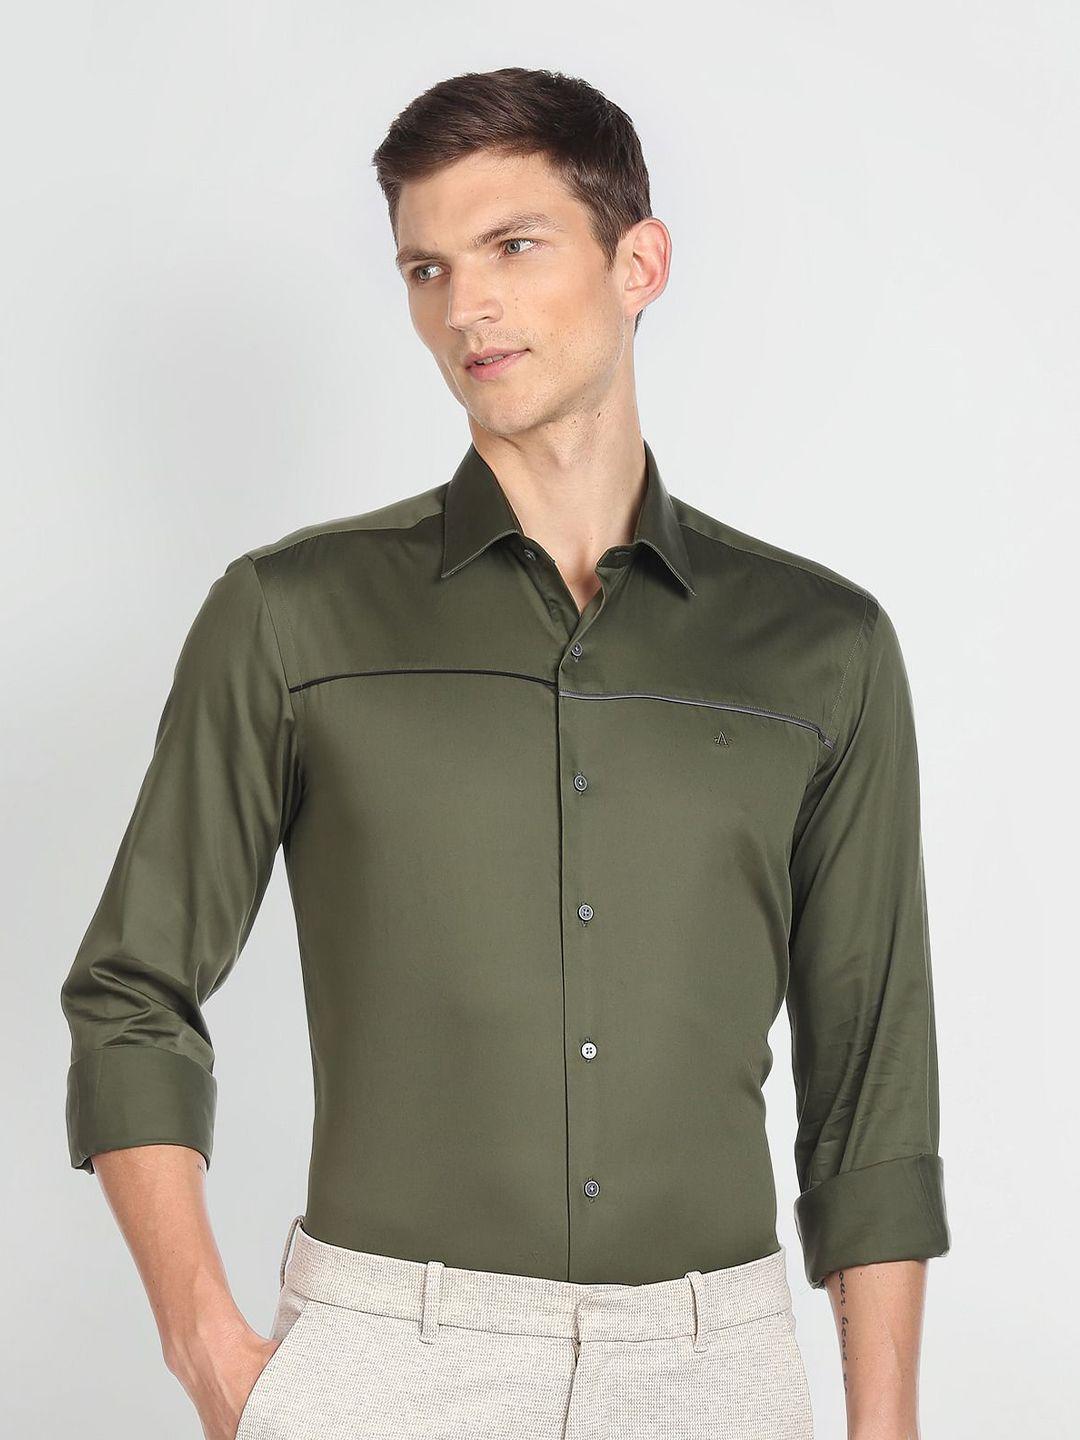 arrow new york slim fit spread collar formal shirt